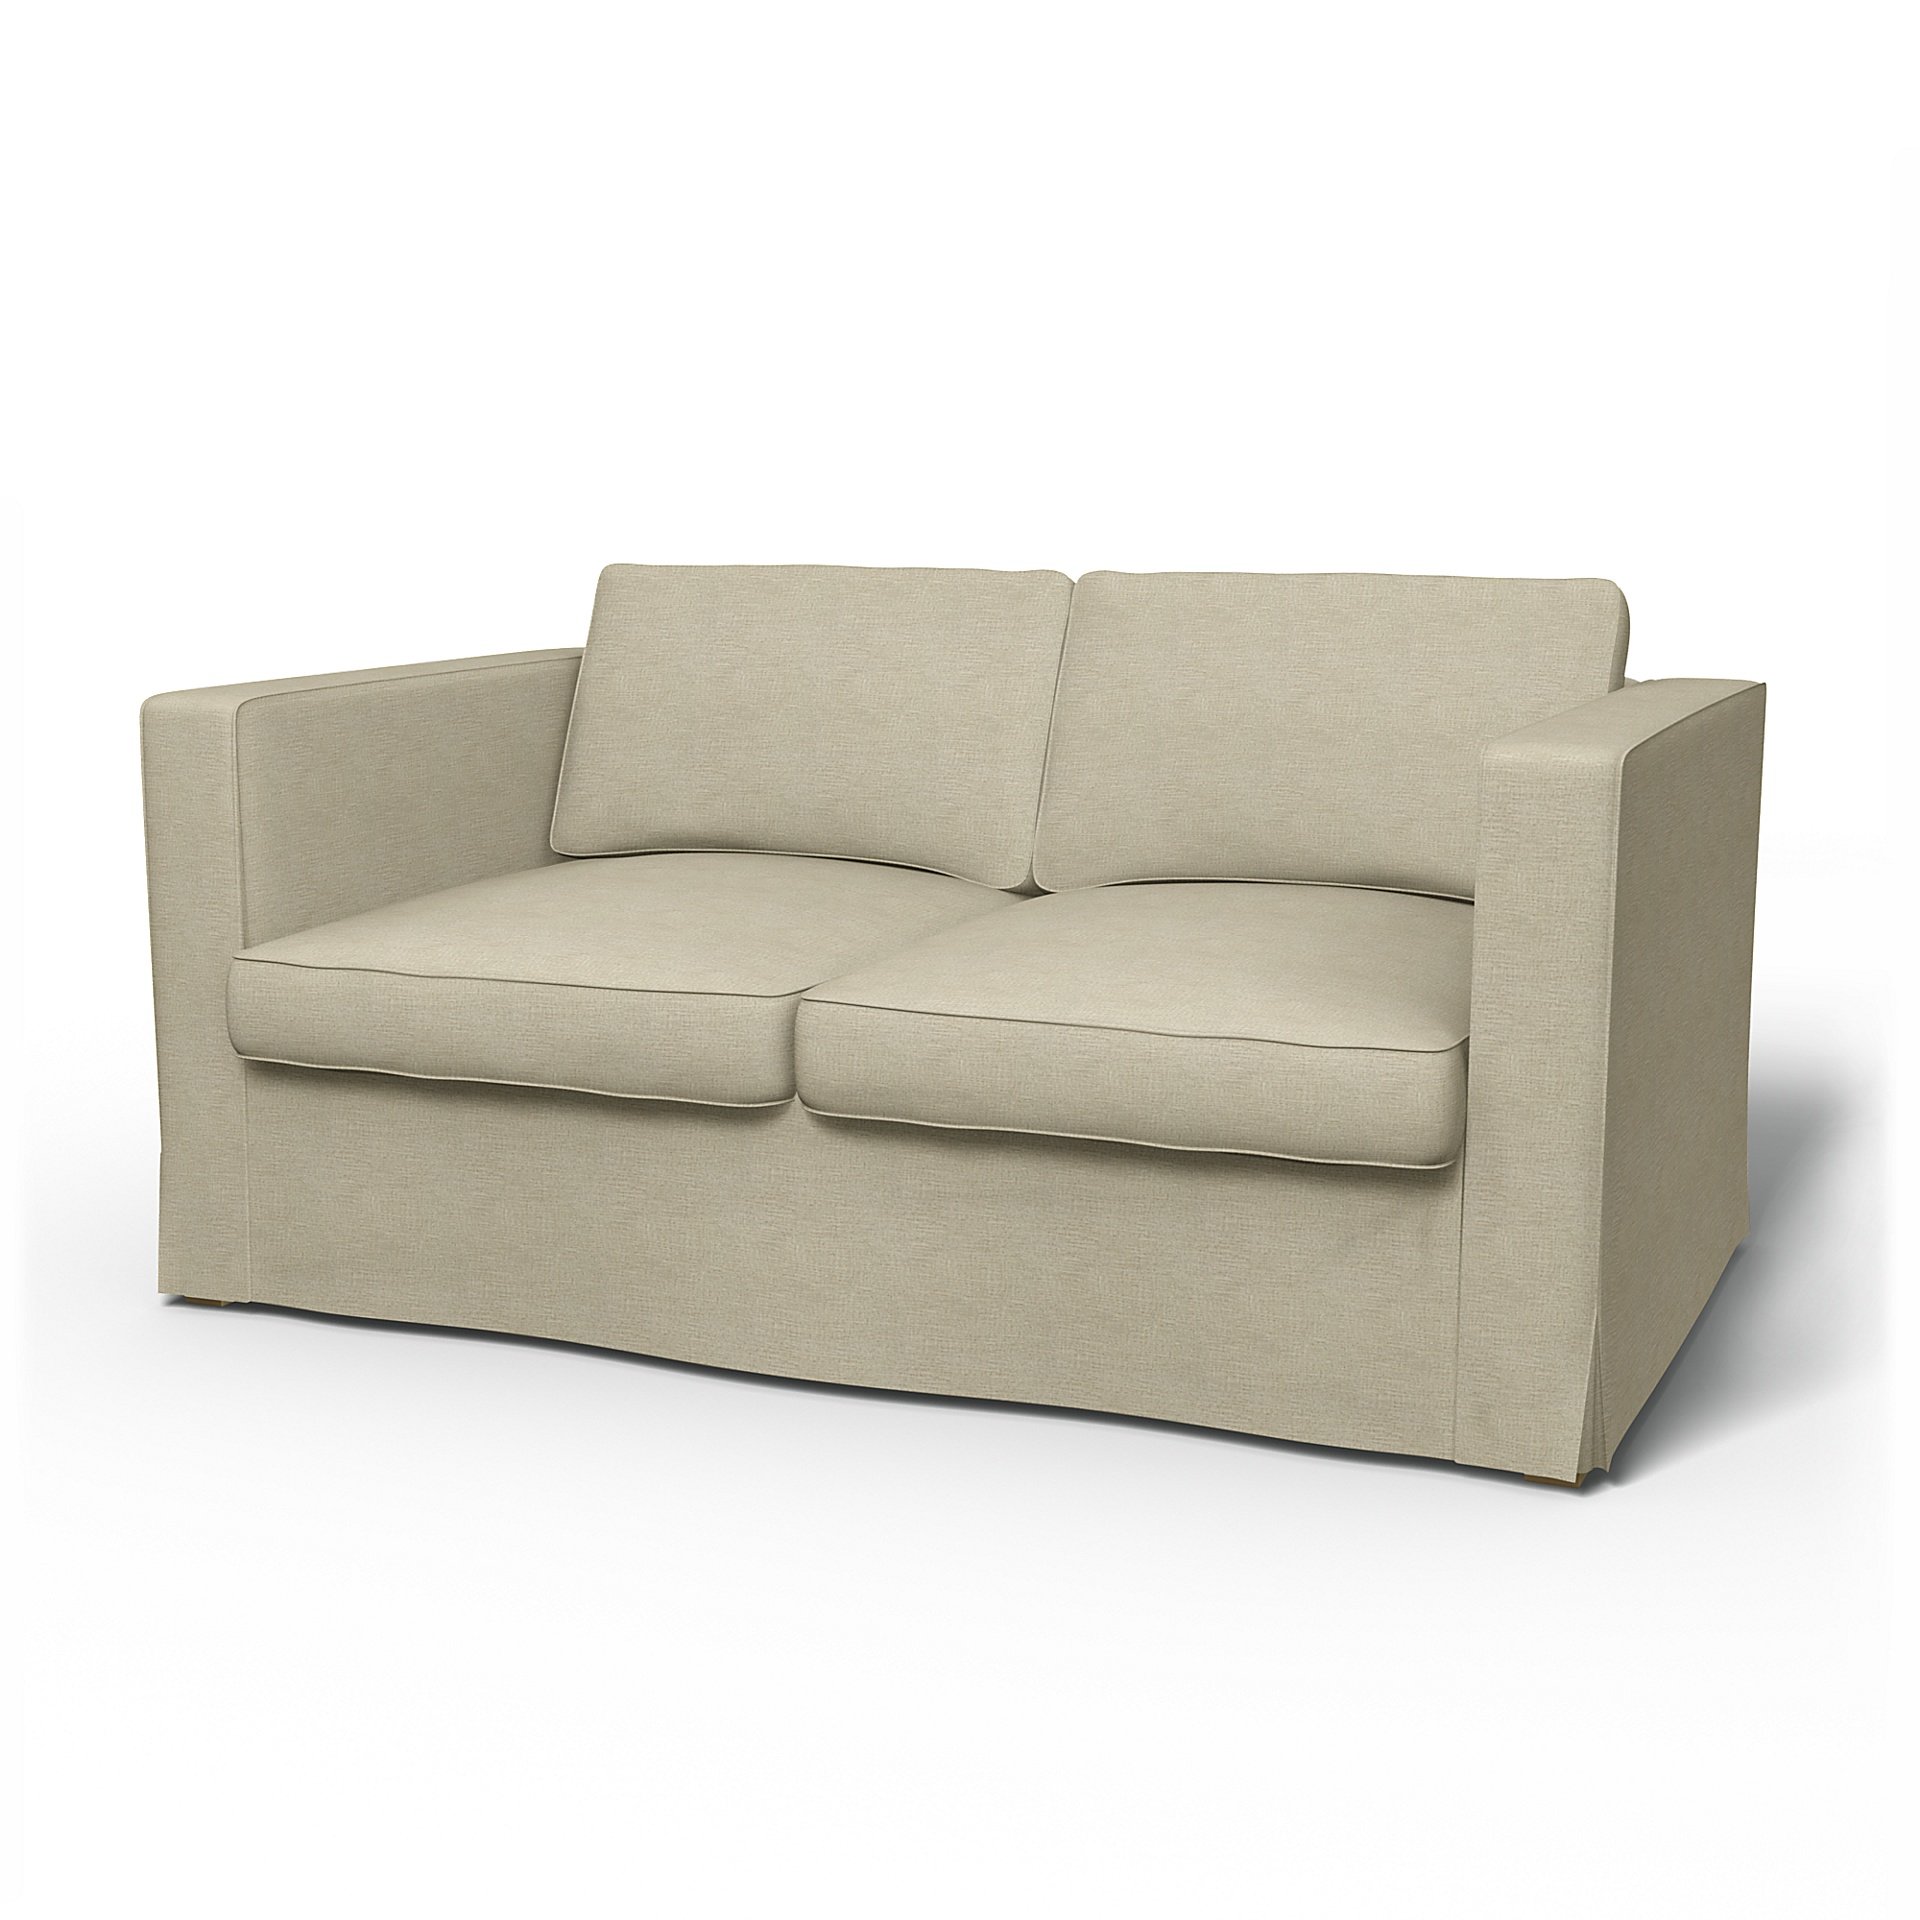 IKEA - Karlanda 2 Seater Sofa Cover, Soft White, Boucle & Texture - Bemz